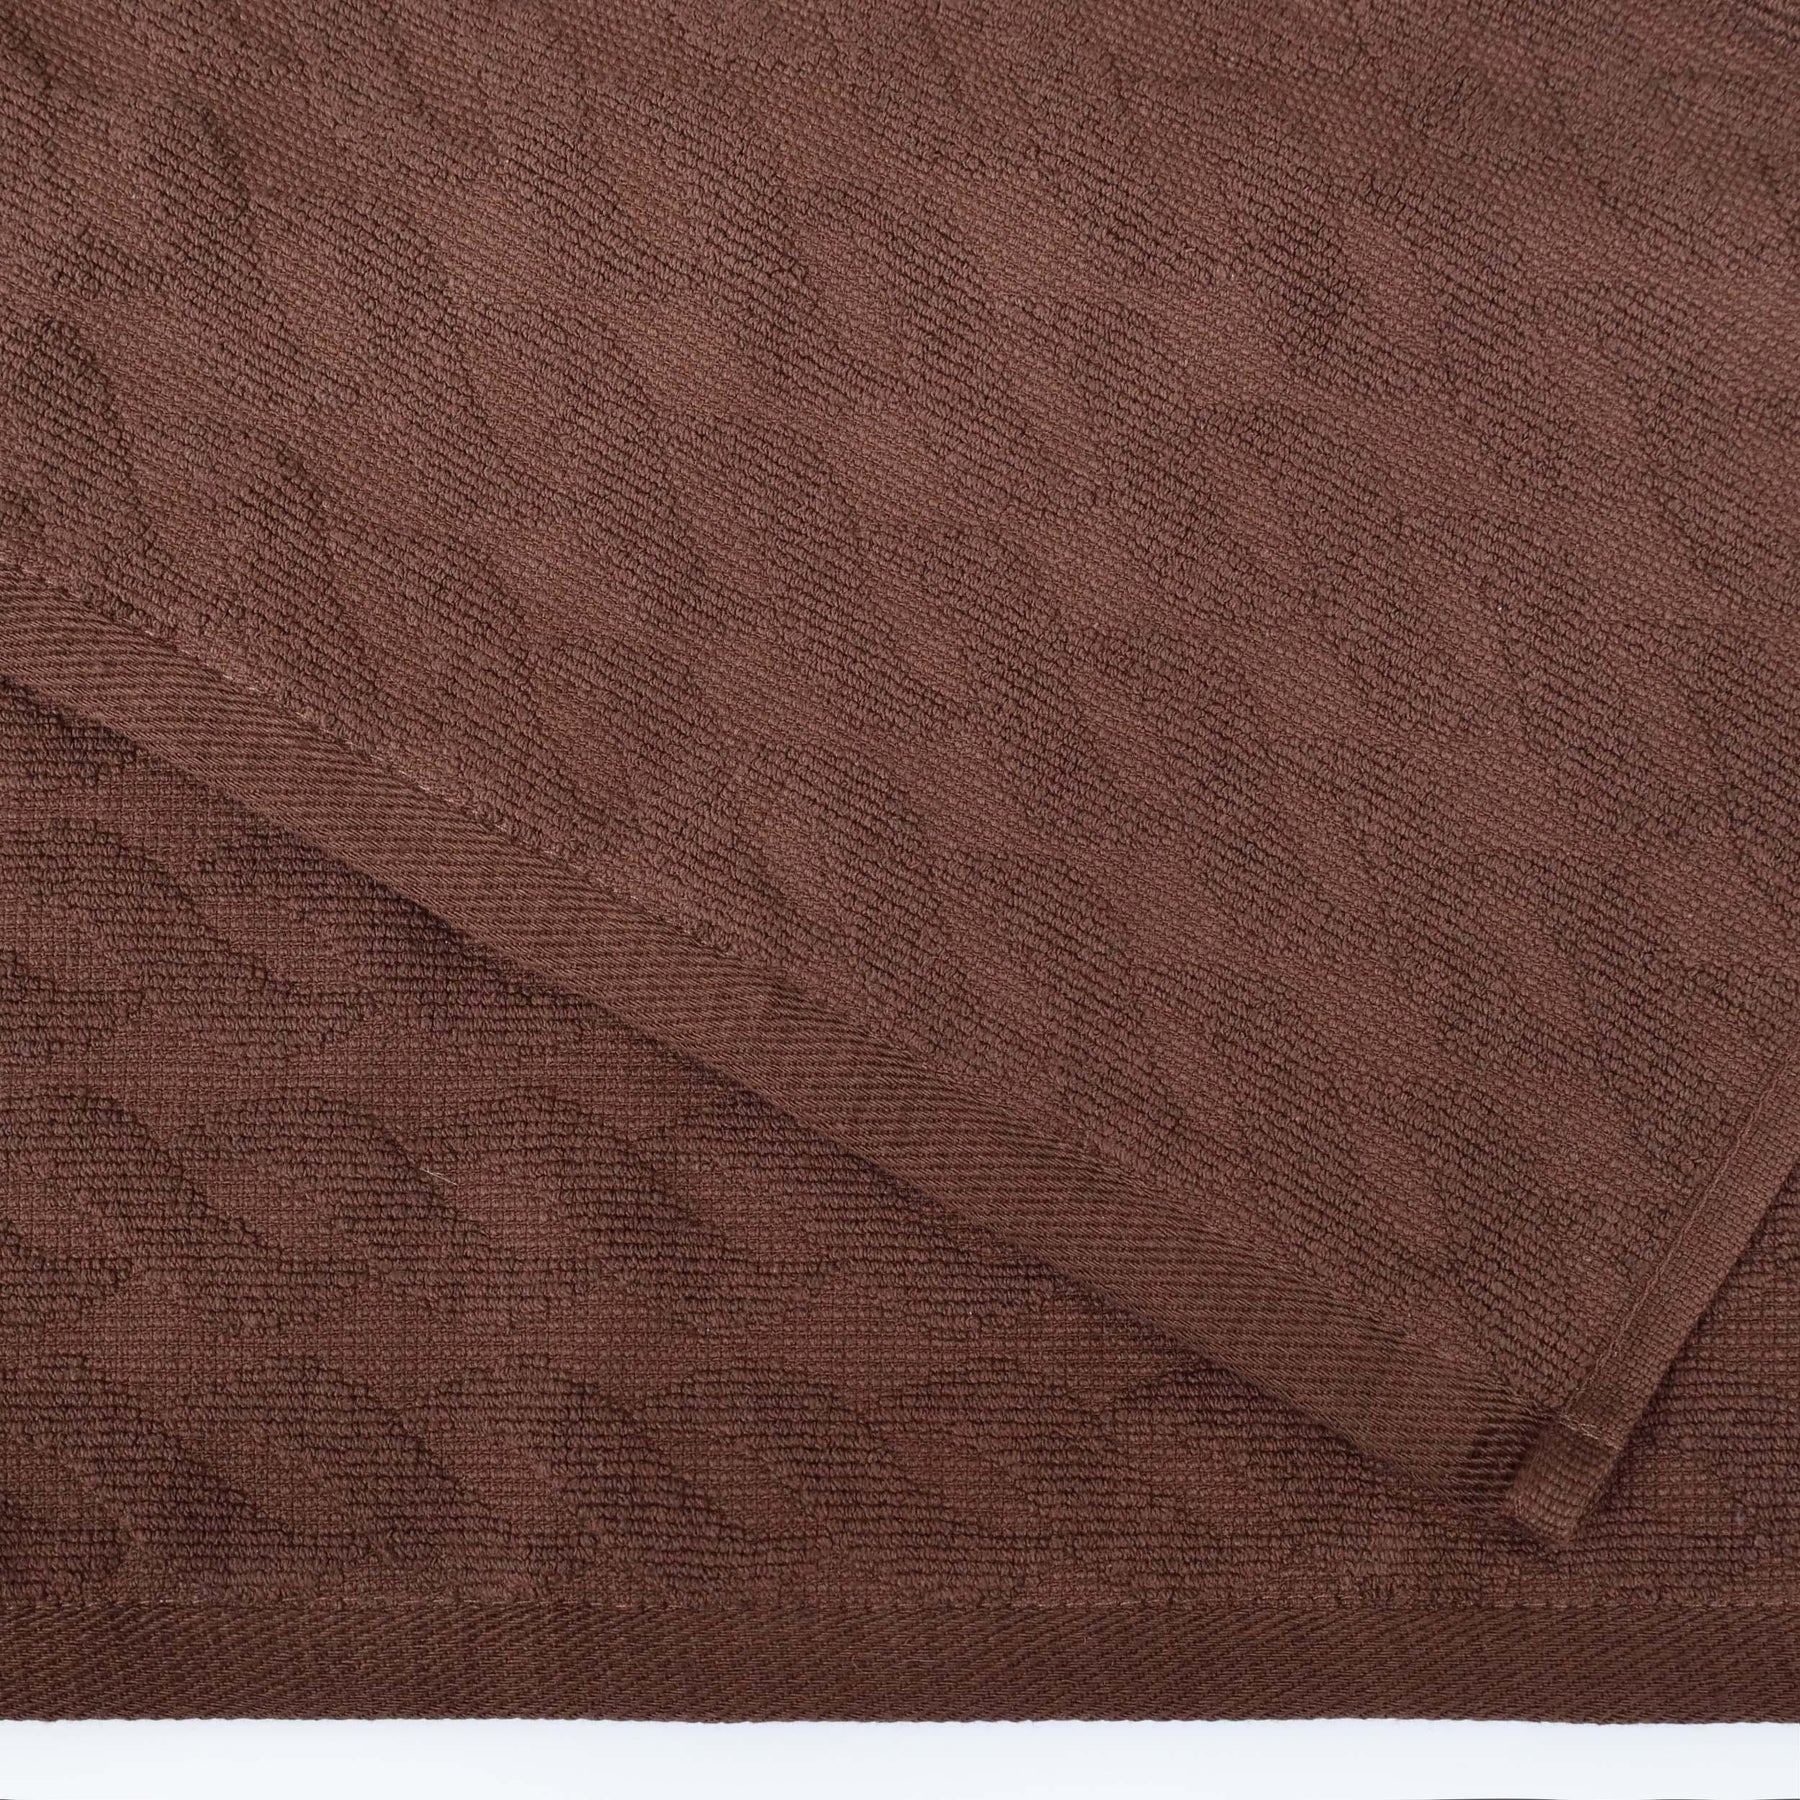 Premium Turkish Cotton Jacquard Herringbone and Solid 4-Piece Bath Towel Set -  Chocolate 